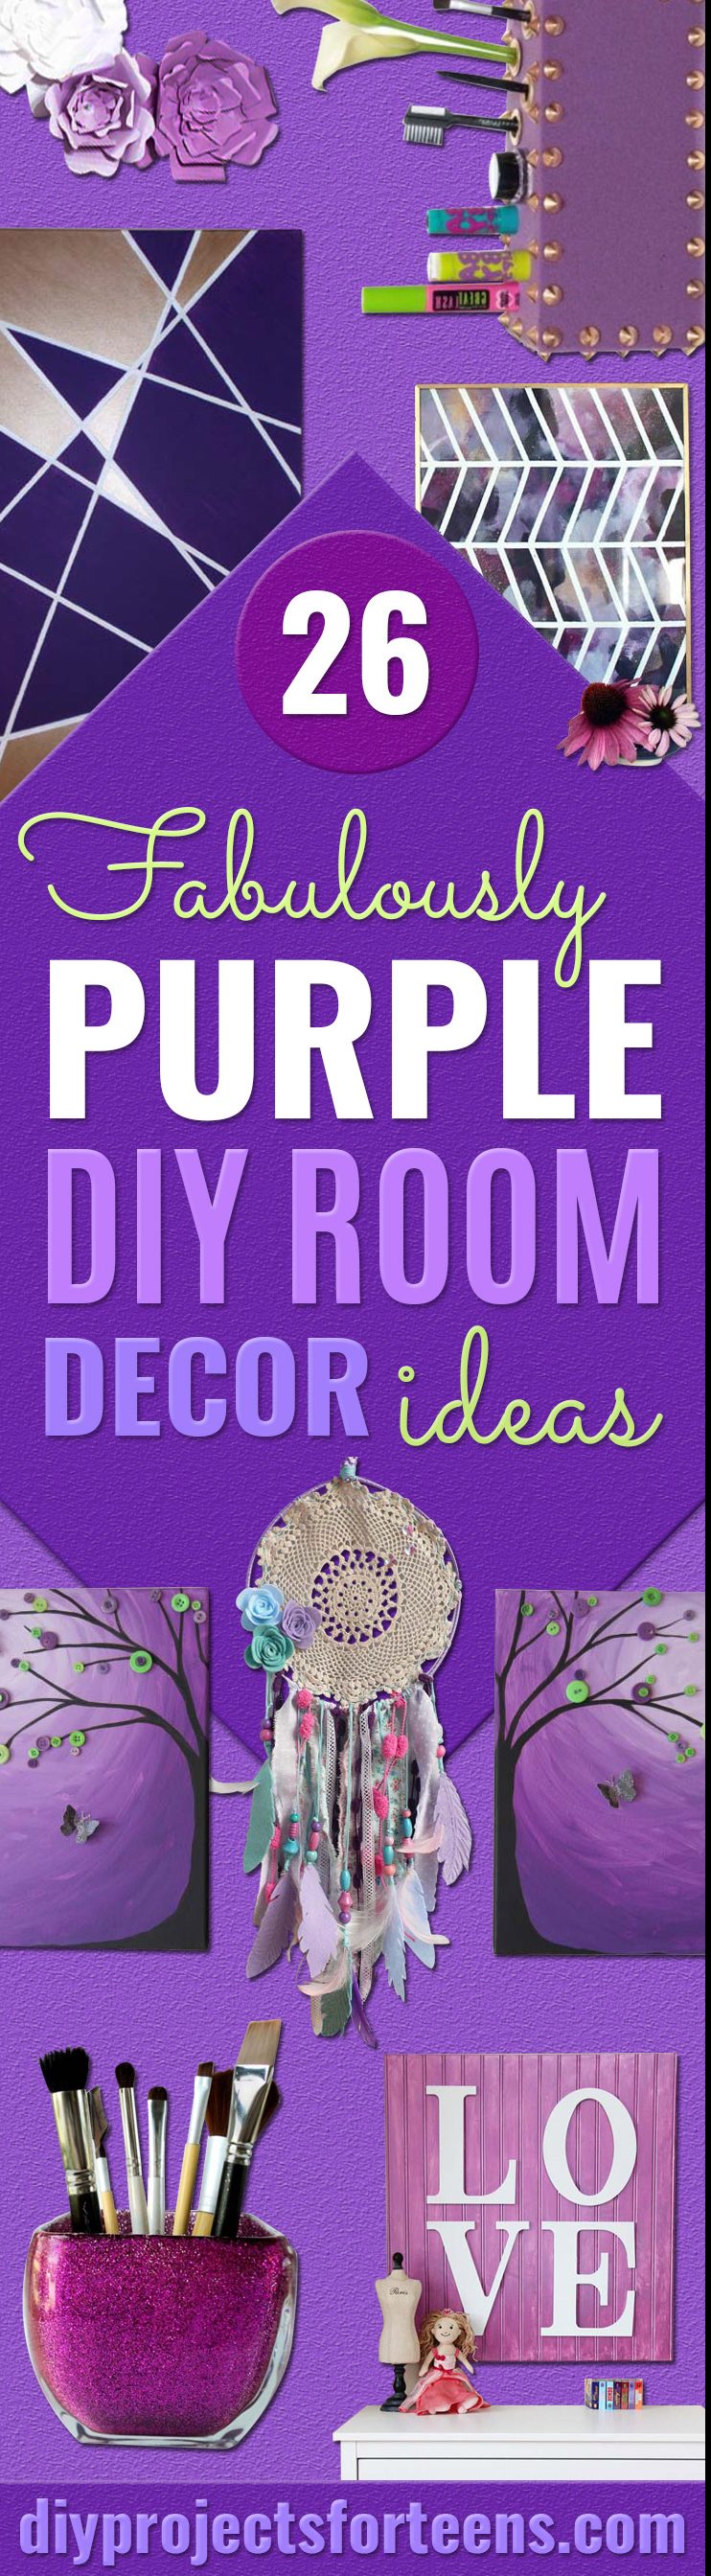 26 Fabulously Purple DIY Room Decor Ideas